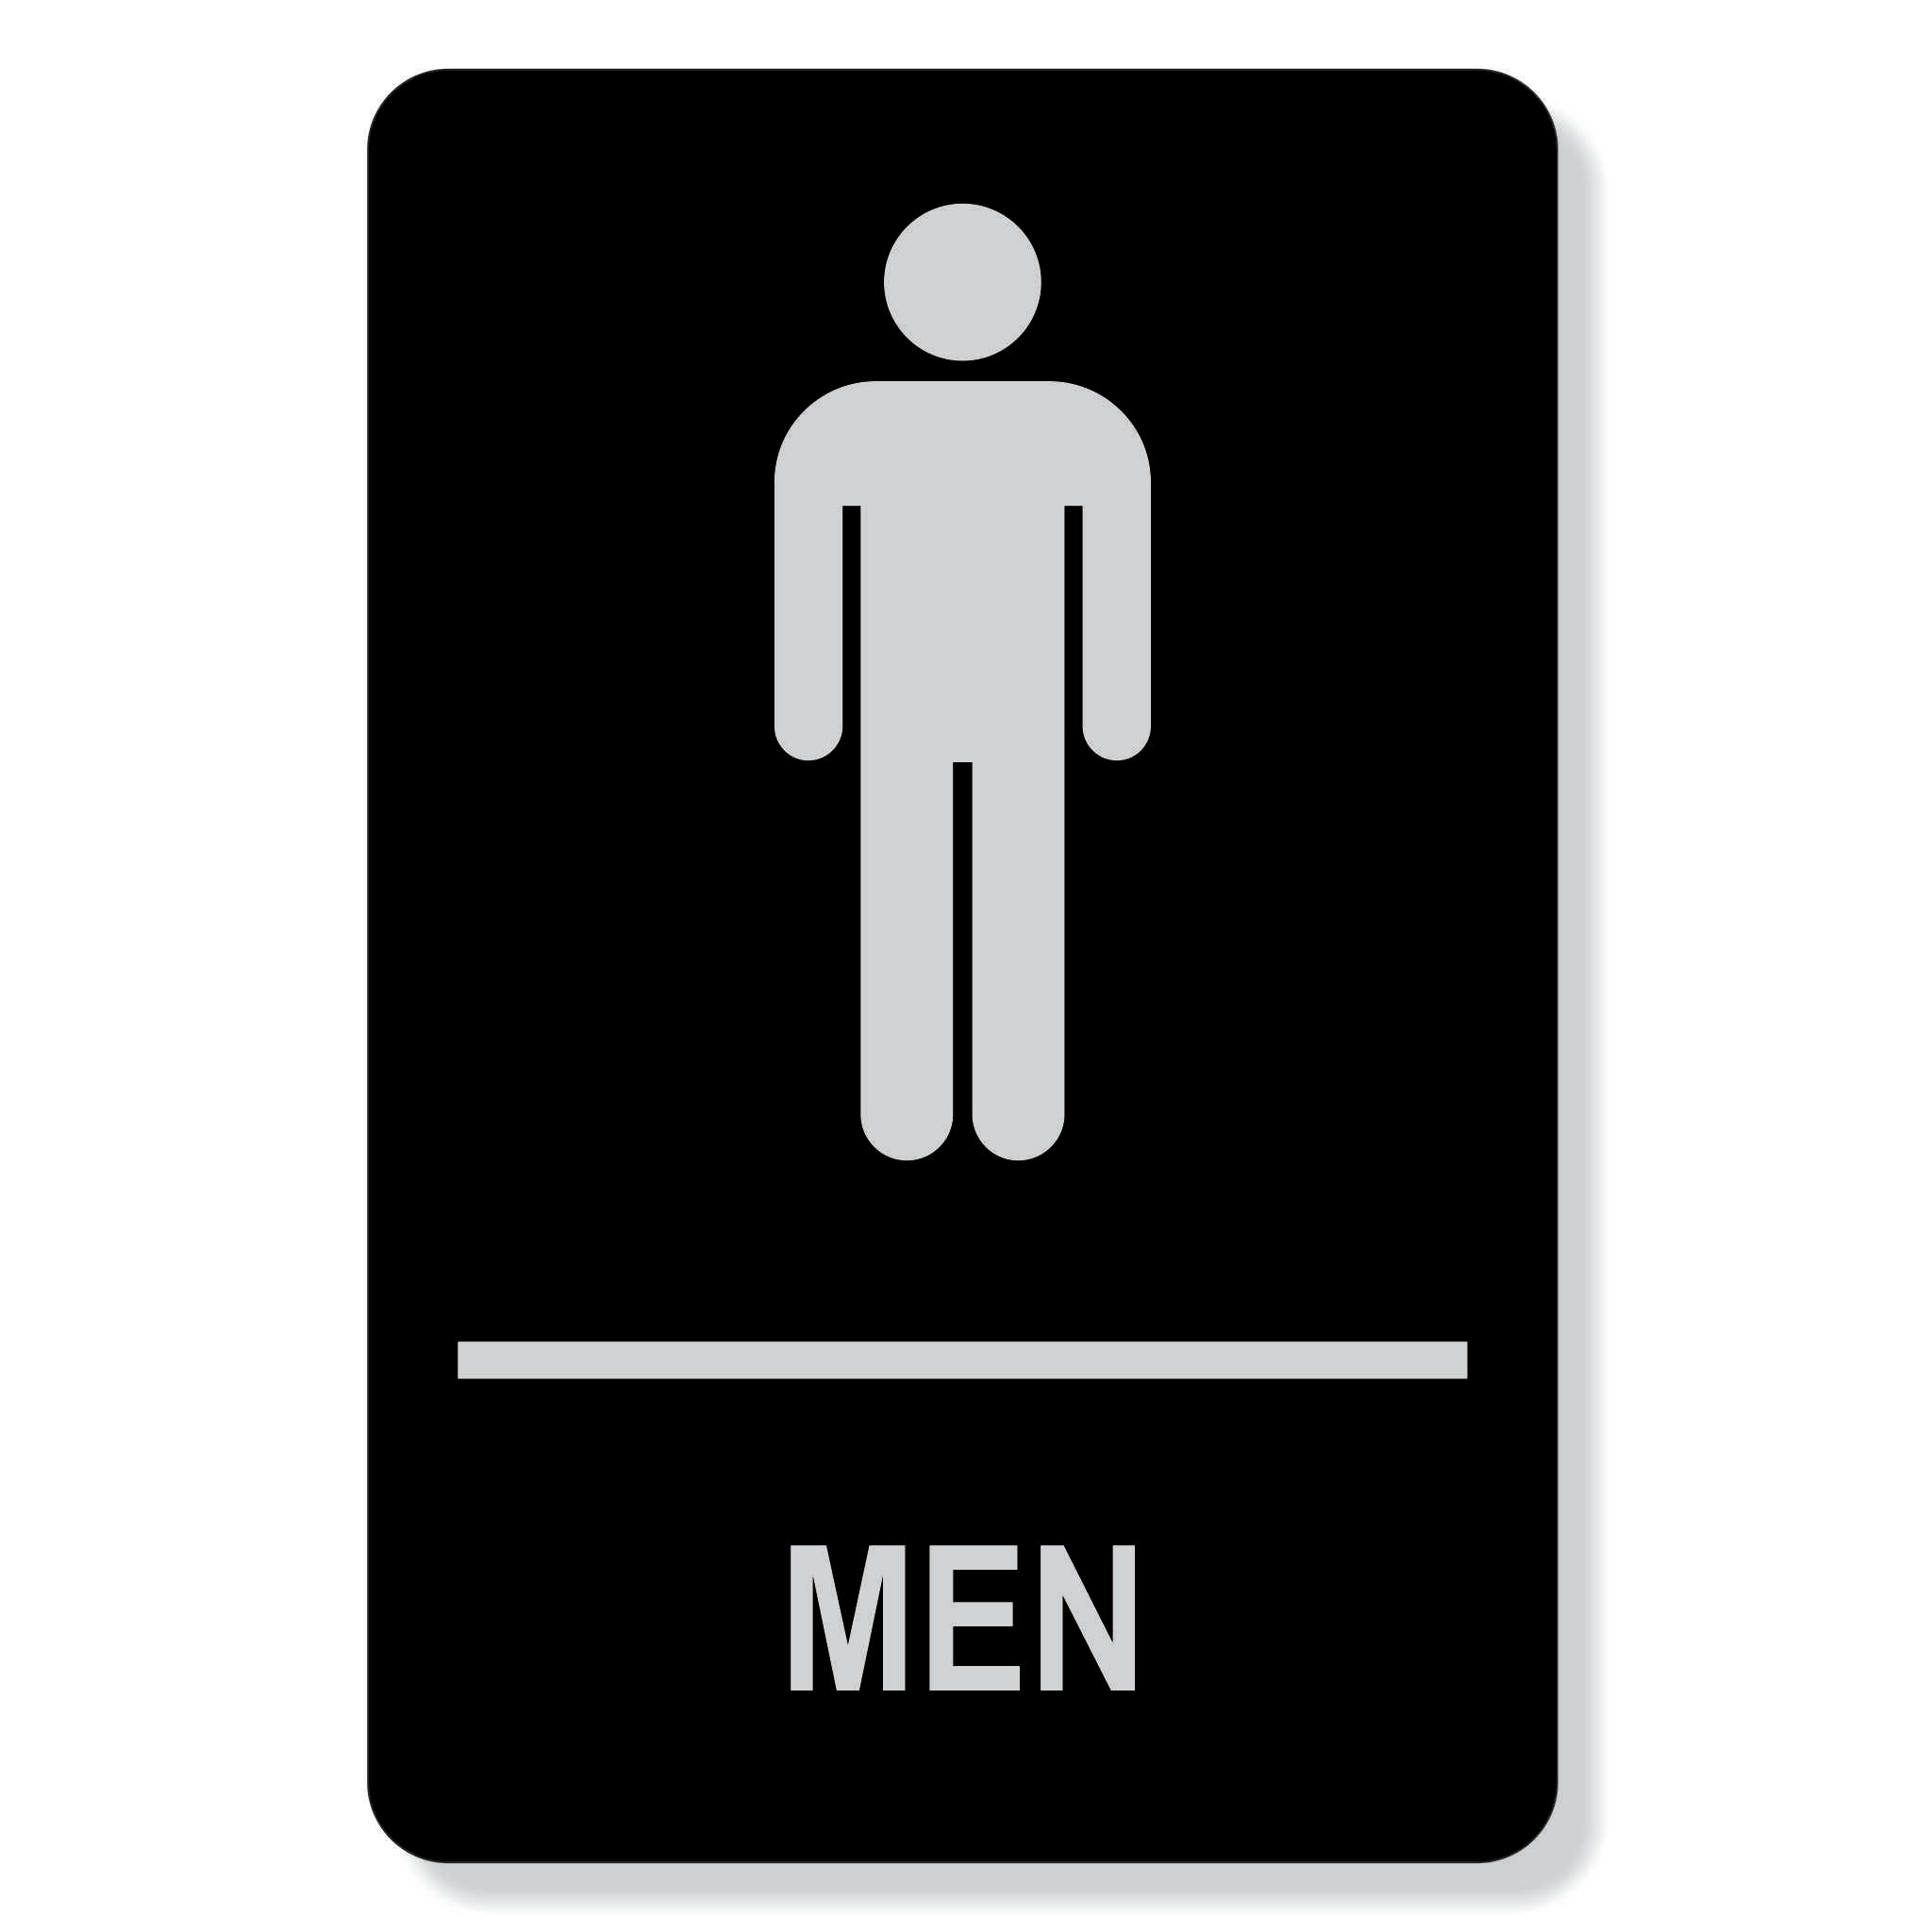 TJX- MEN washroom sign - non accessible facility